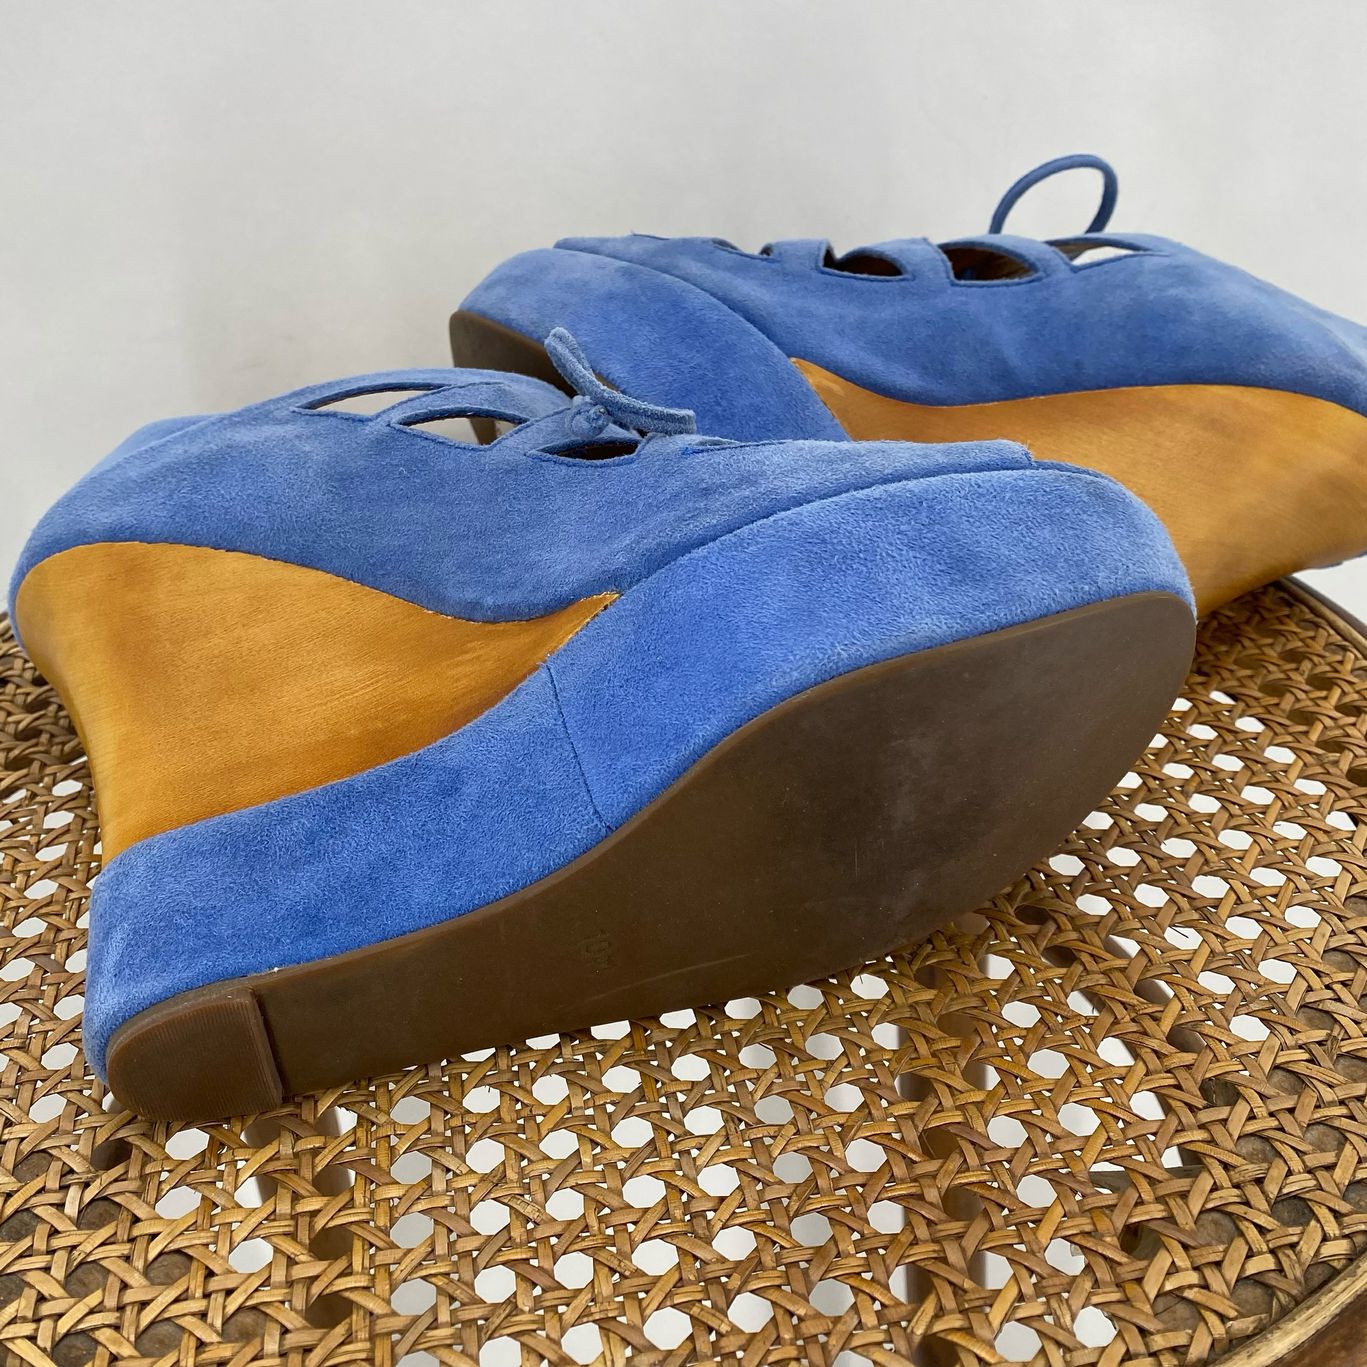 Blue W Shoe Size 10 JEFFREY CAMPBELL Wedge